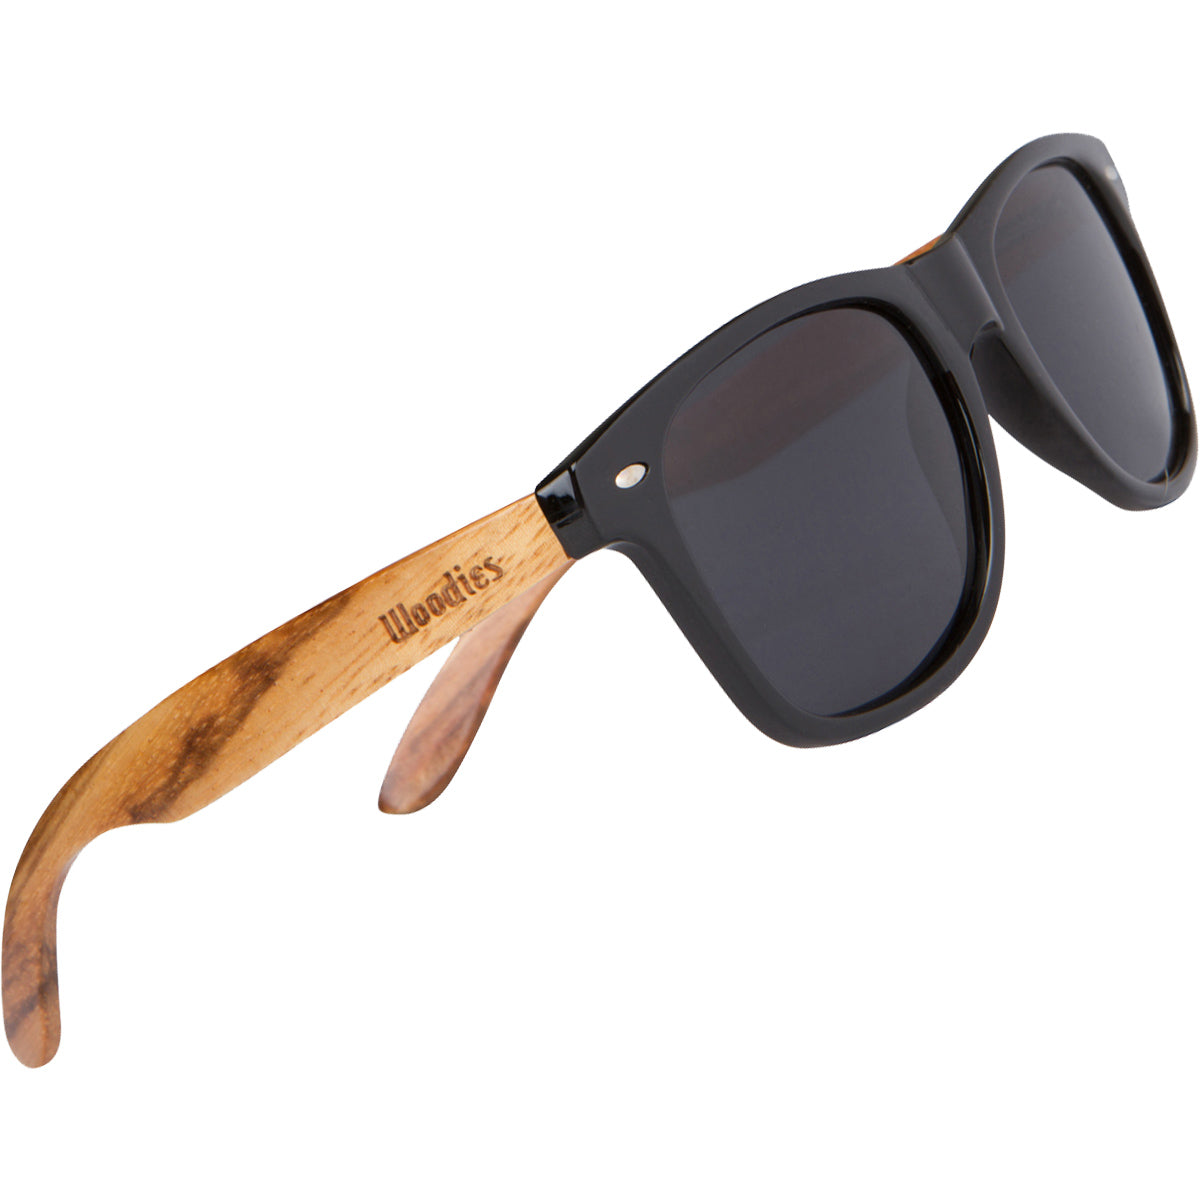 Woodies Zebra Wood Sunglasses with Black Polarized Lenses